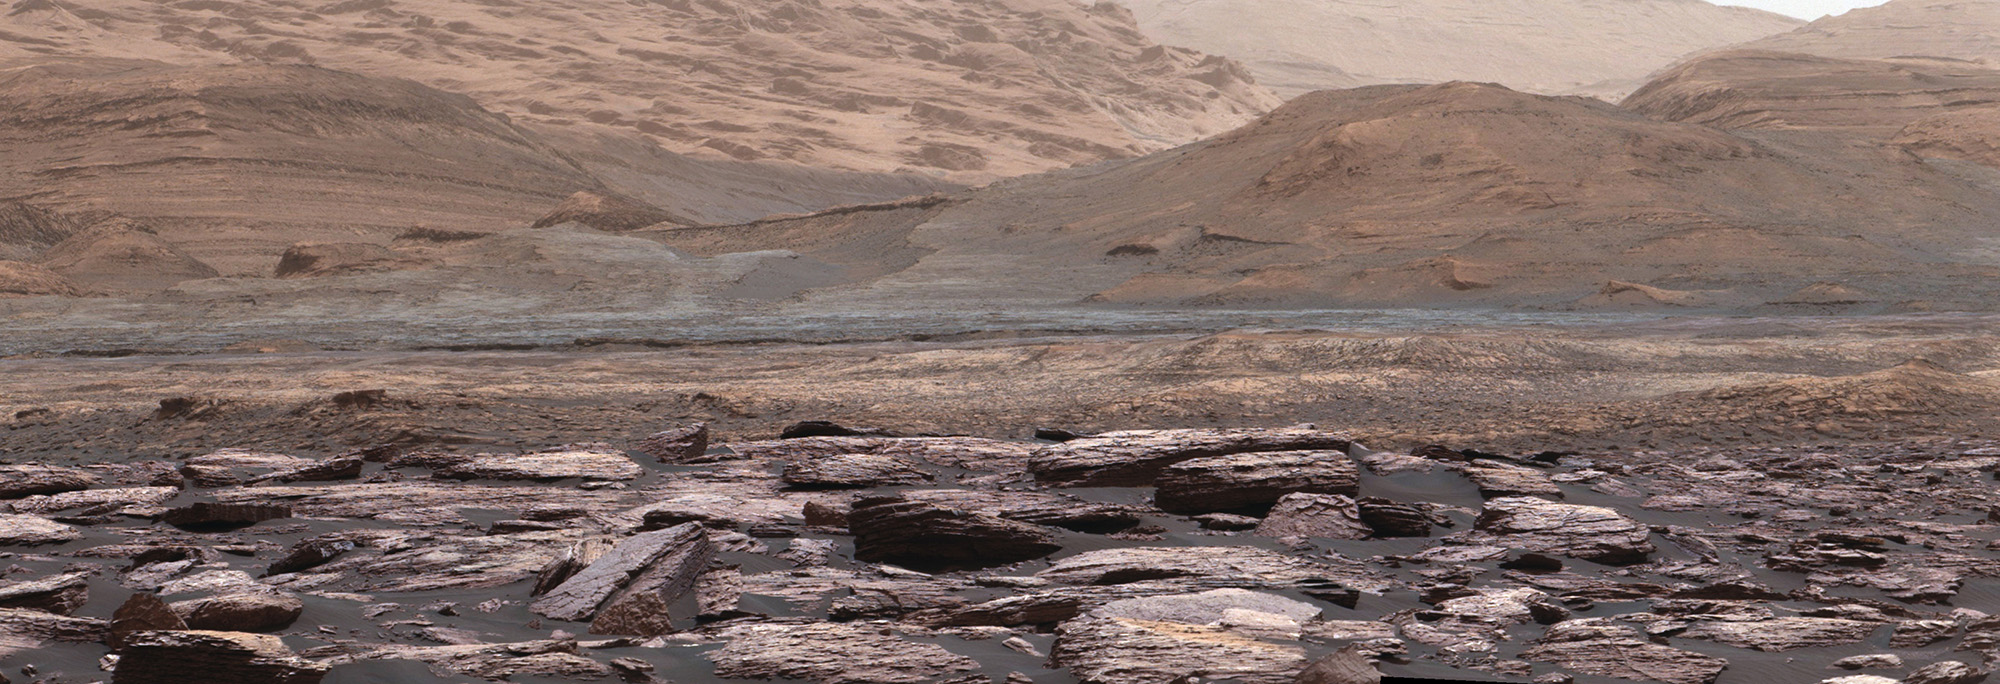 mars-rover-purplehued-rocks-near-on-mars-2.jpg